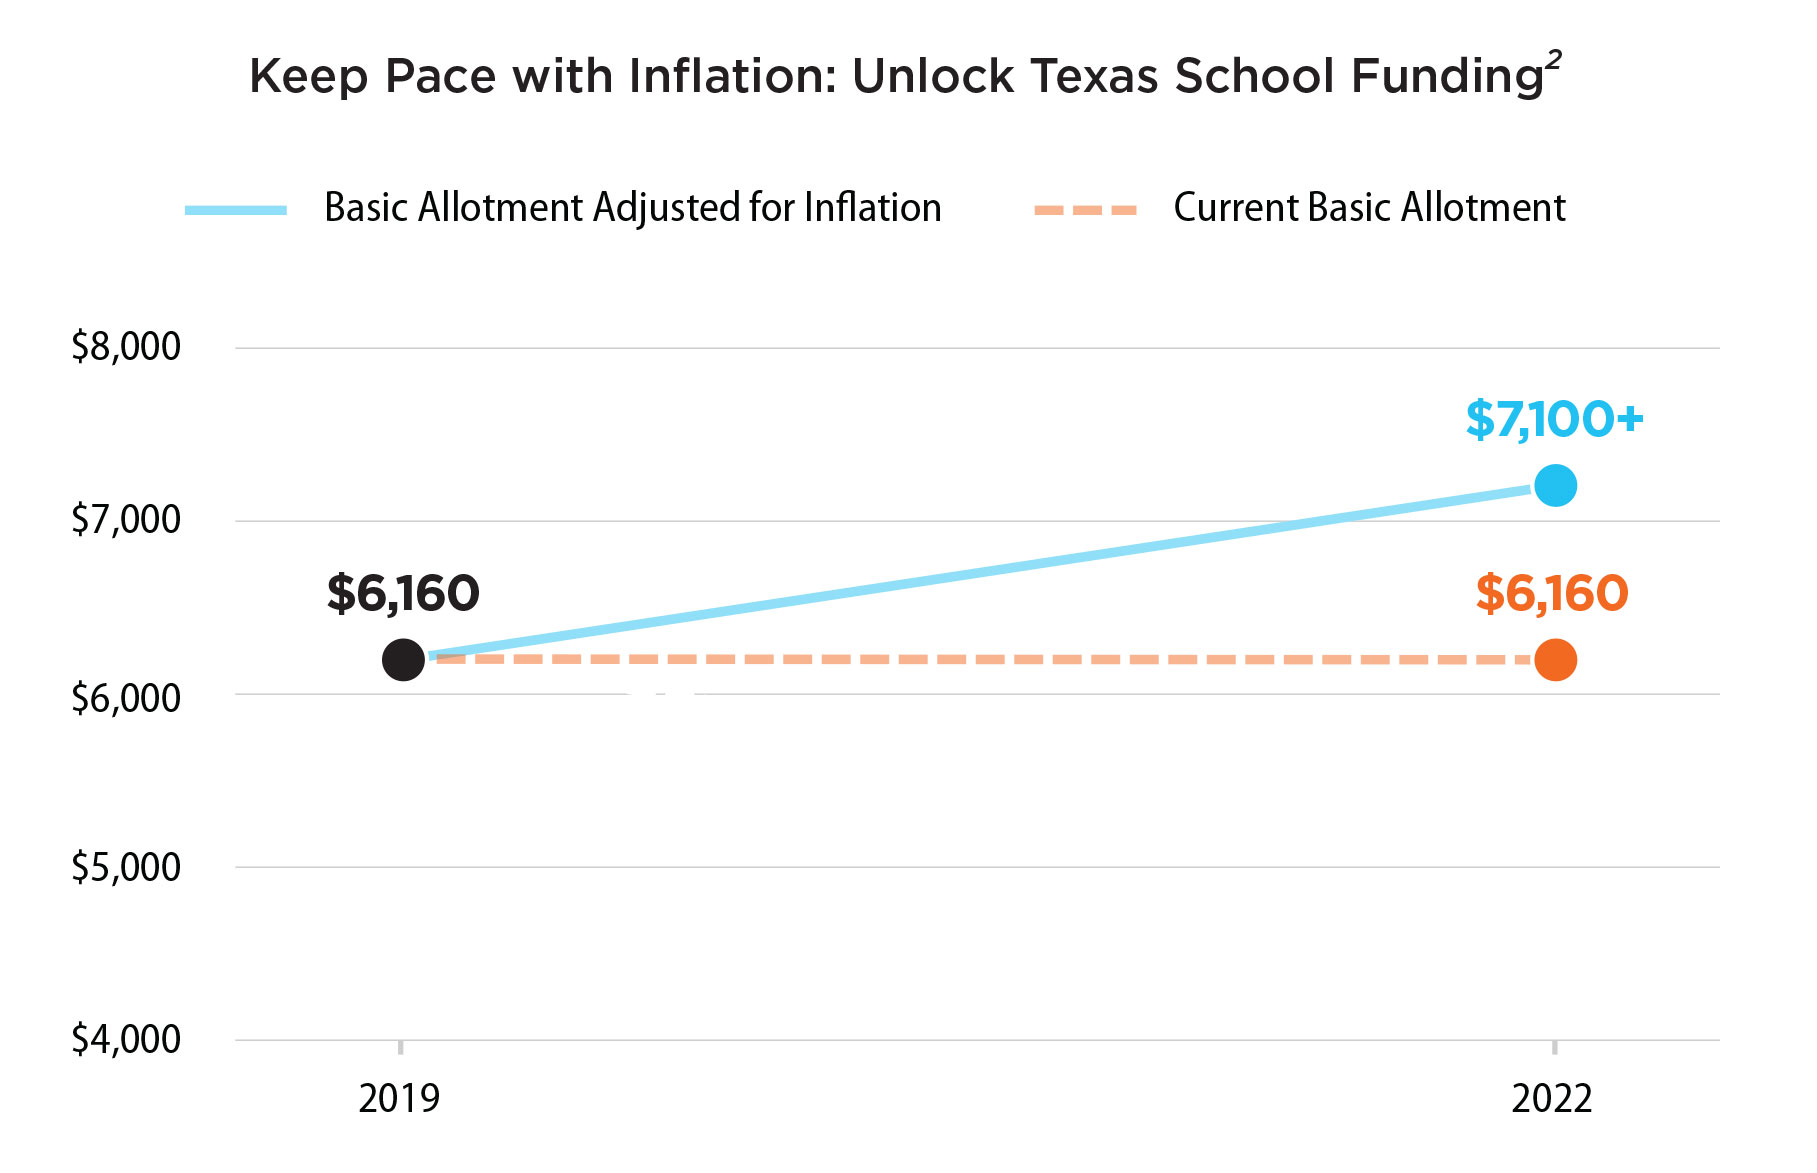 Texas School Funding 2019 vs 2022